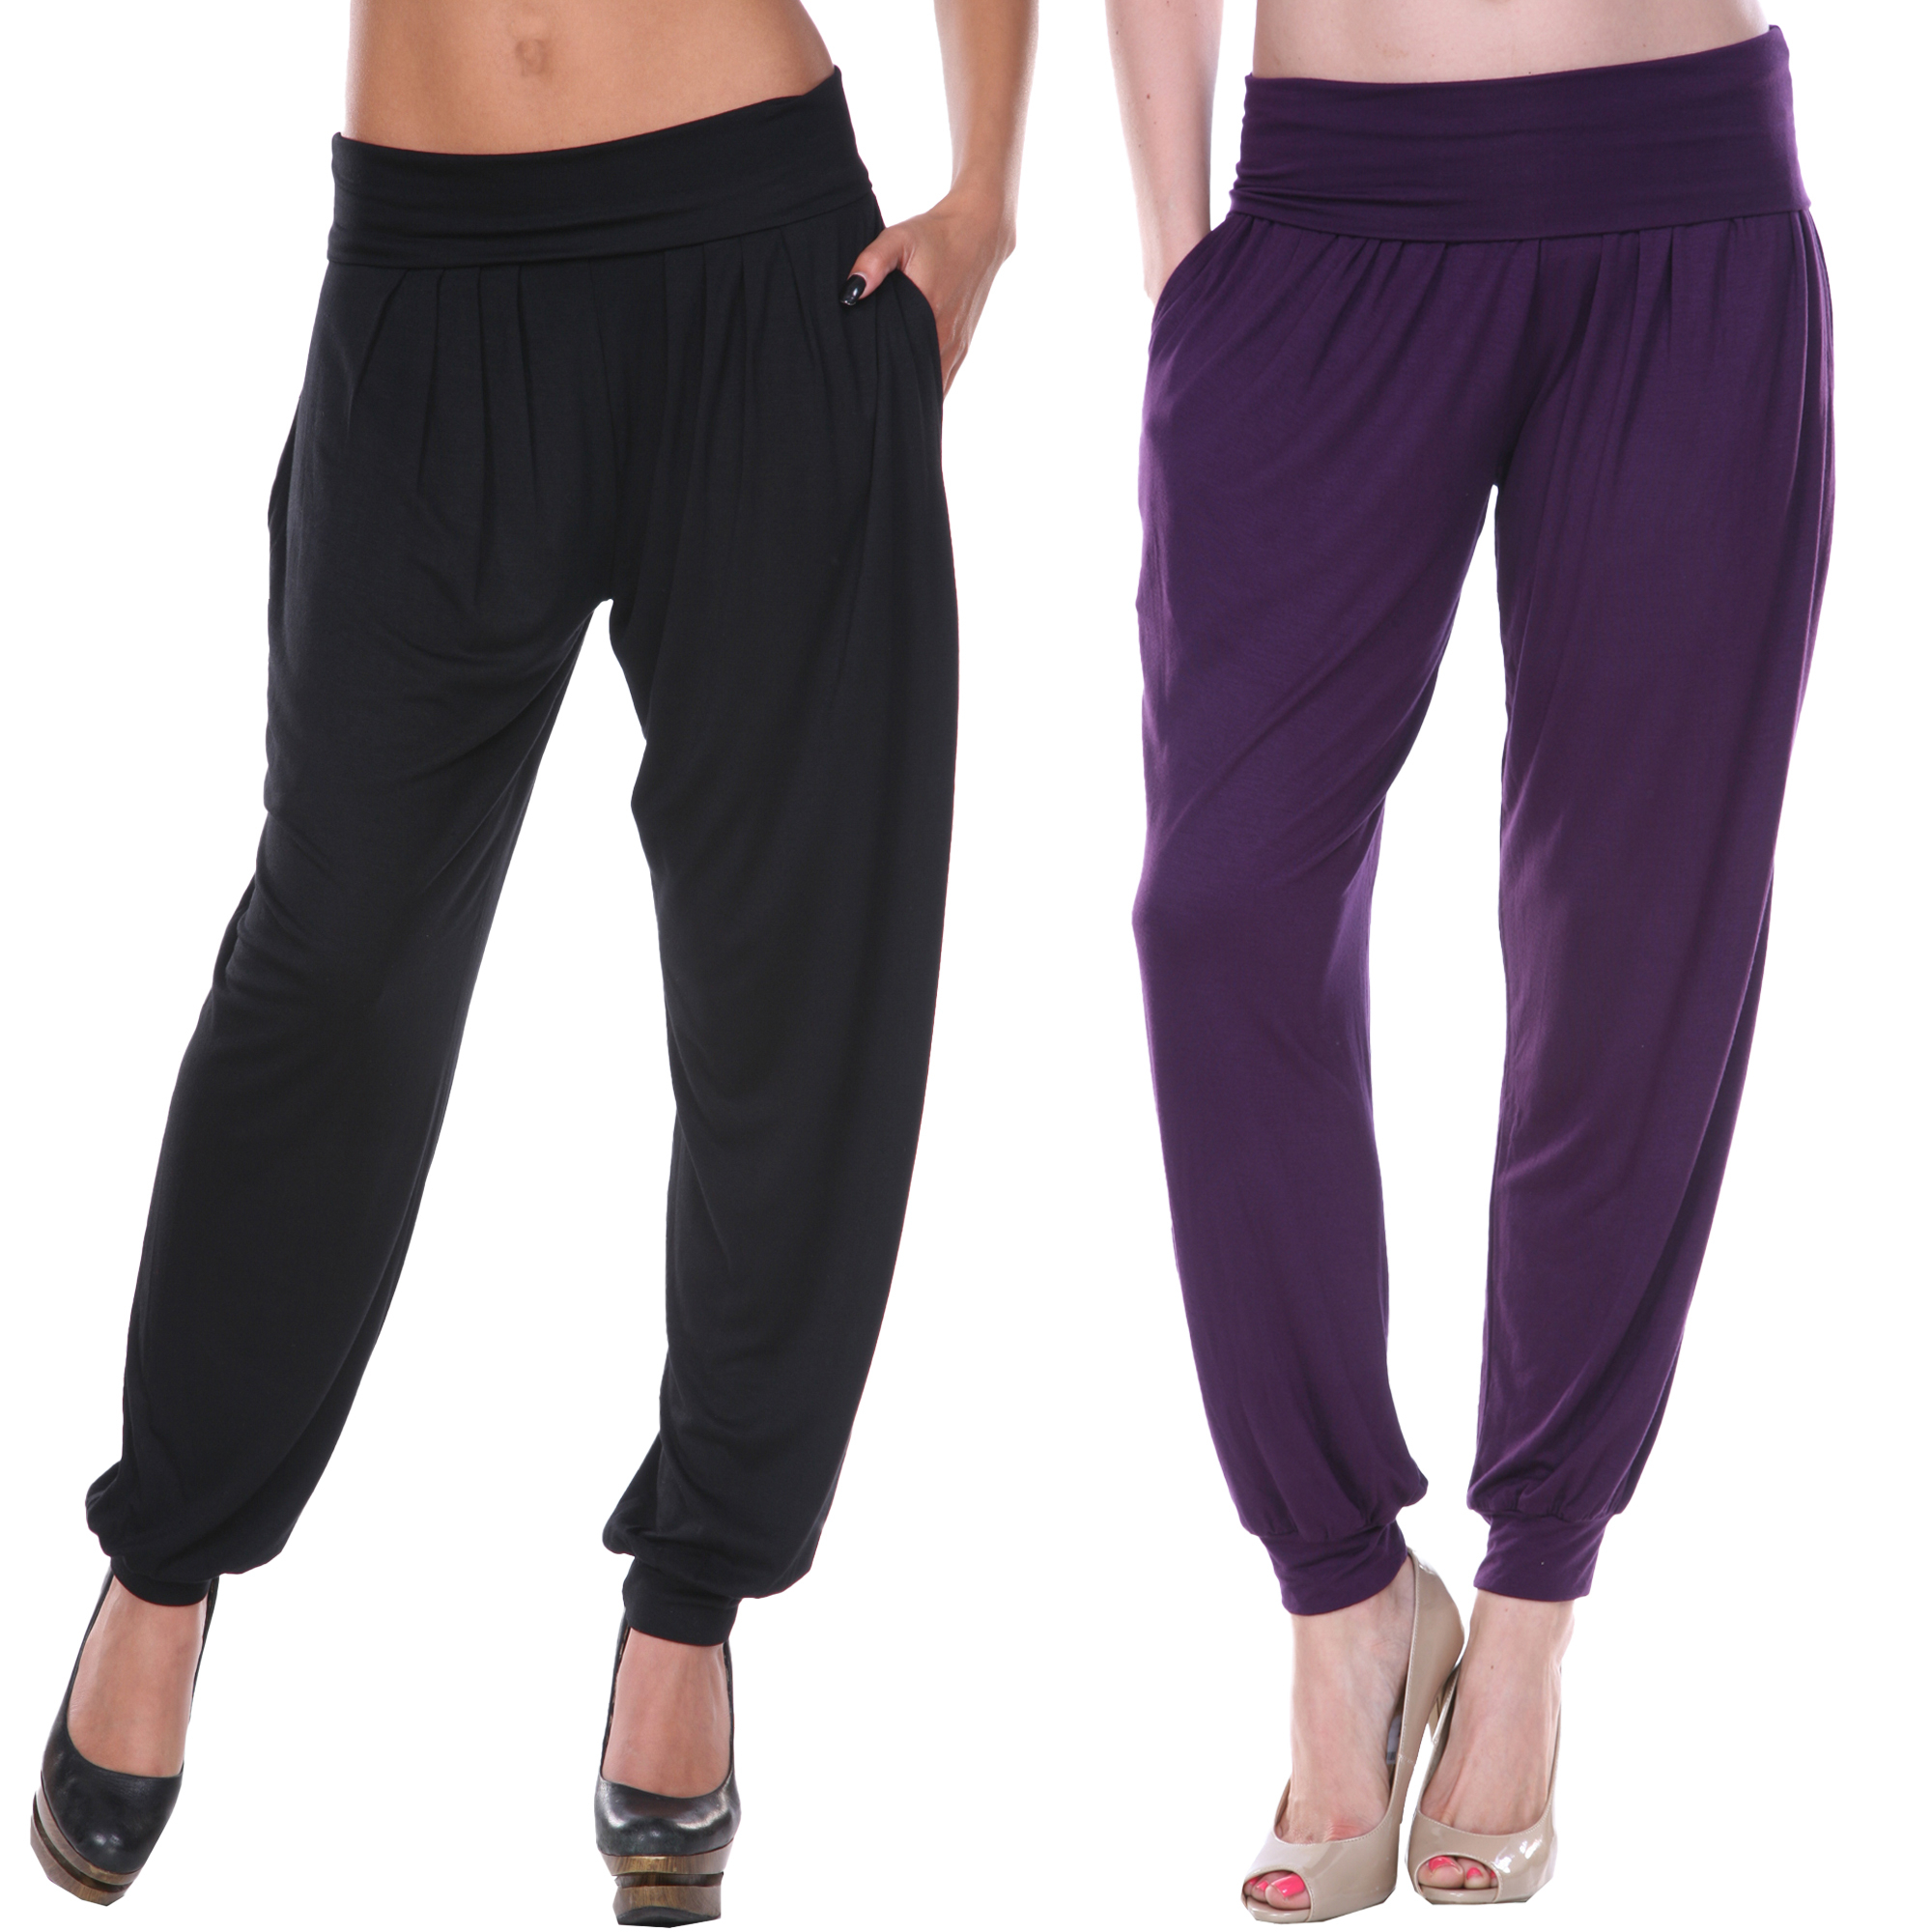 White Mark Women's 2-Pack High Waist Harem Pants - Black, Purple, Large